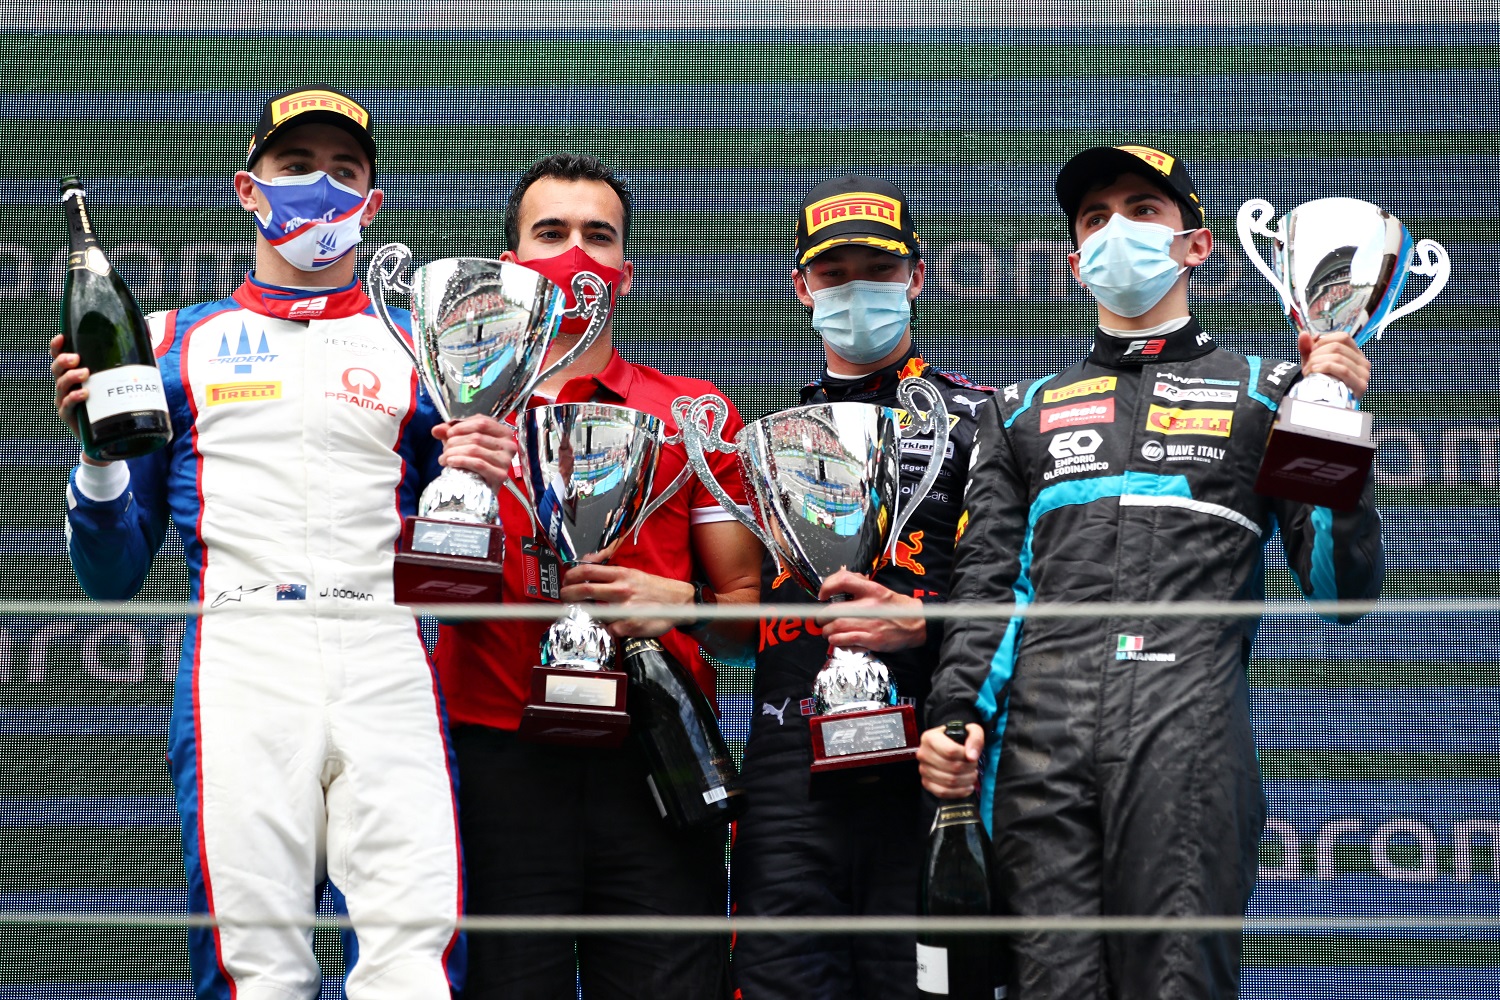 Dennis Hauger, Jack Doohan & Matteo Nannini podium race 3 barcelone 2021 FIA F3